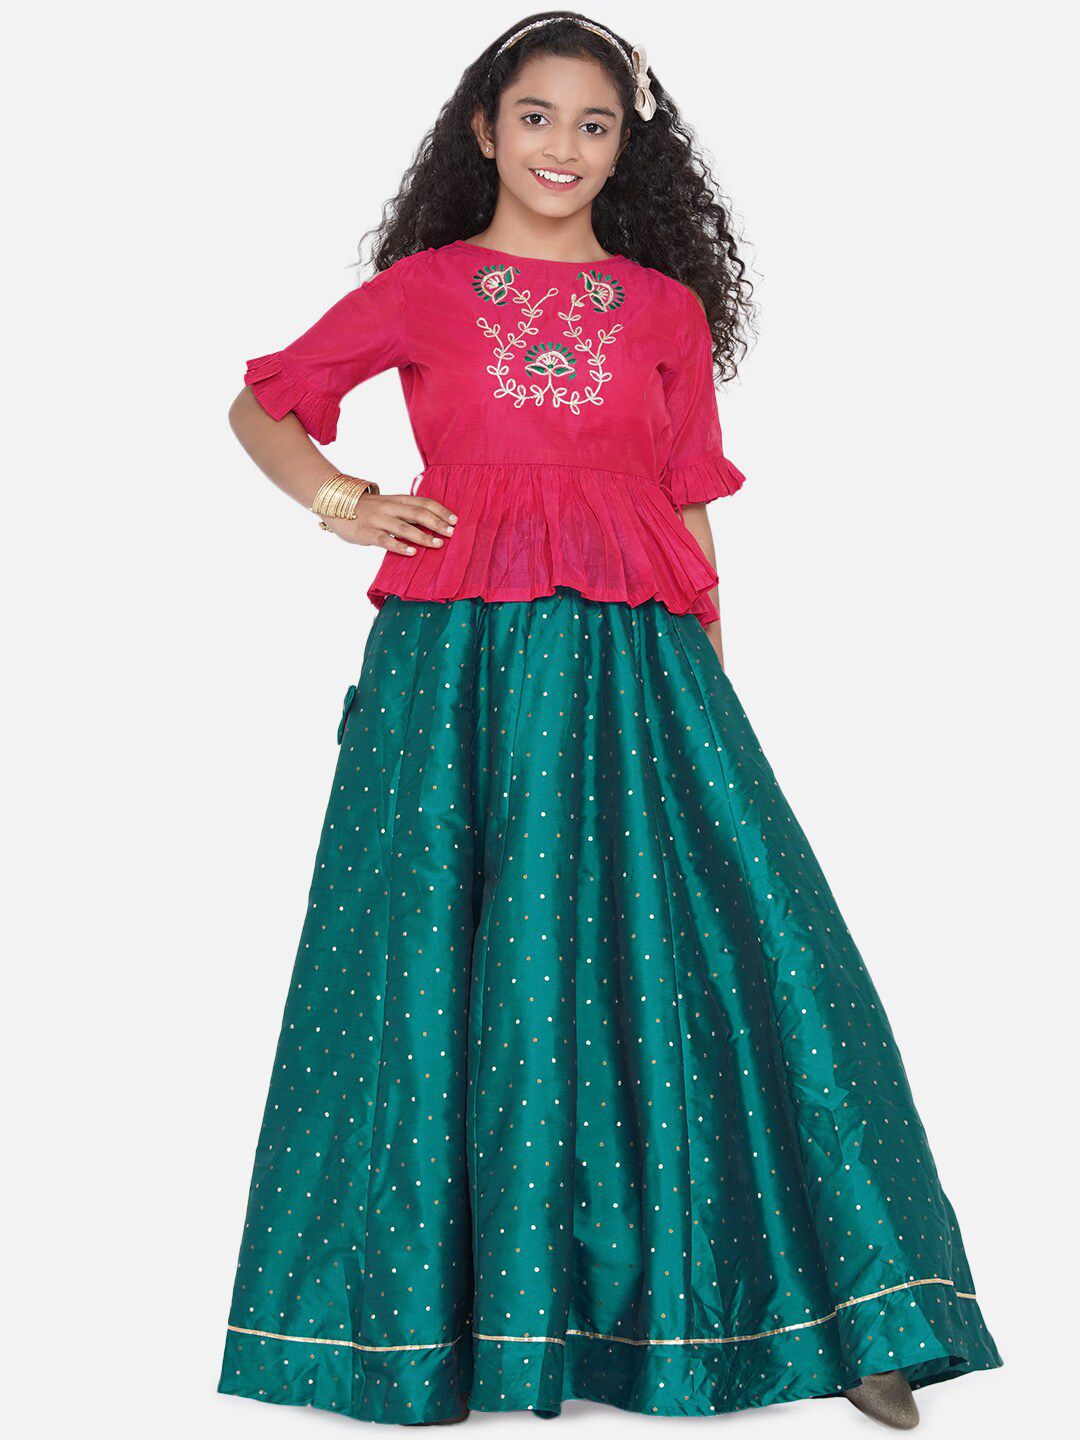 Bitiya by Bhama Girls Pink & Green Embroidered Ready to Wear Lehenga Choli Price in India